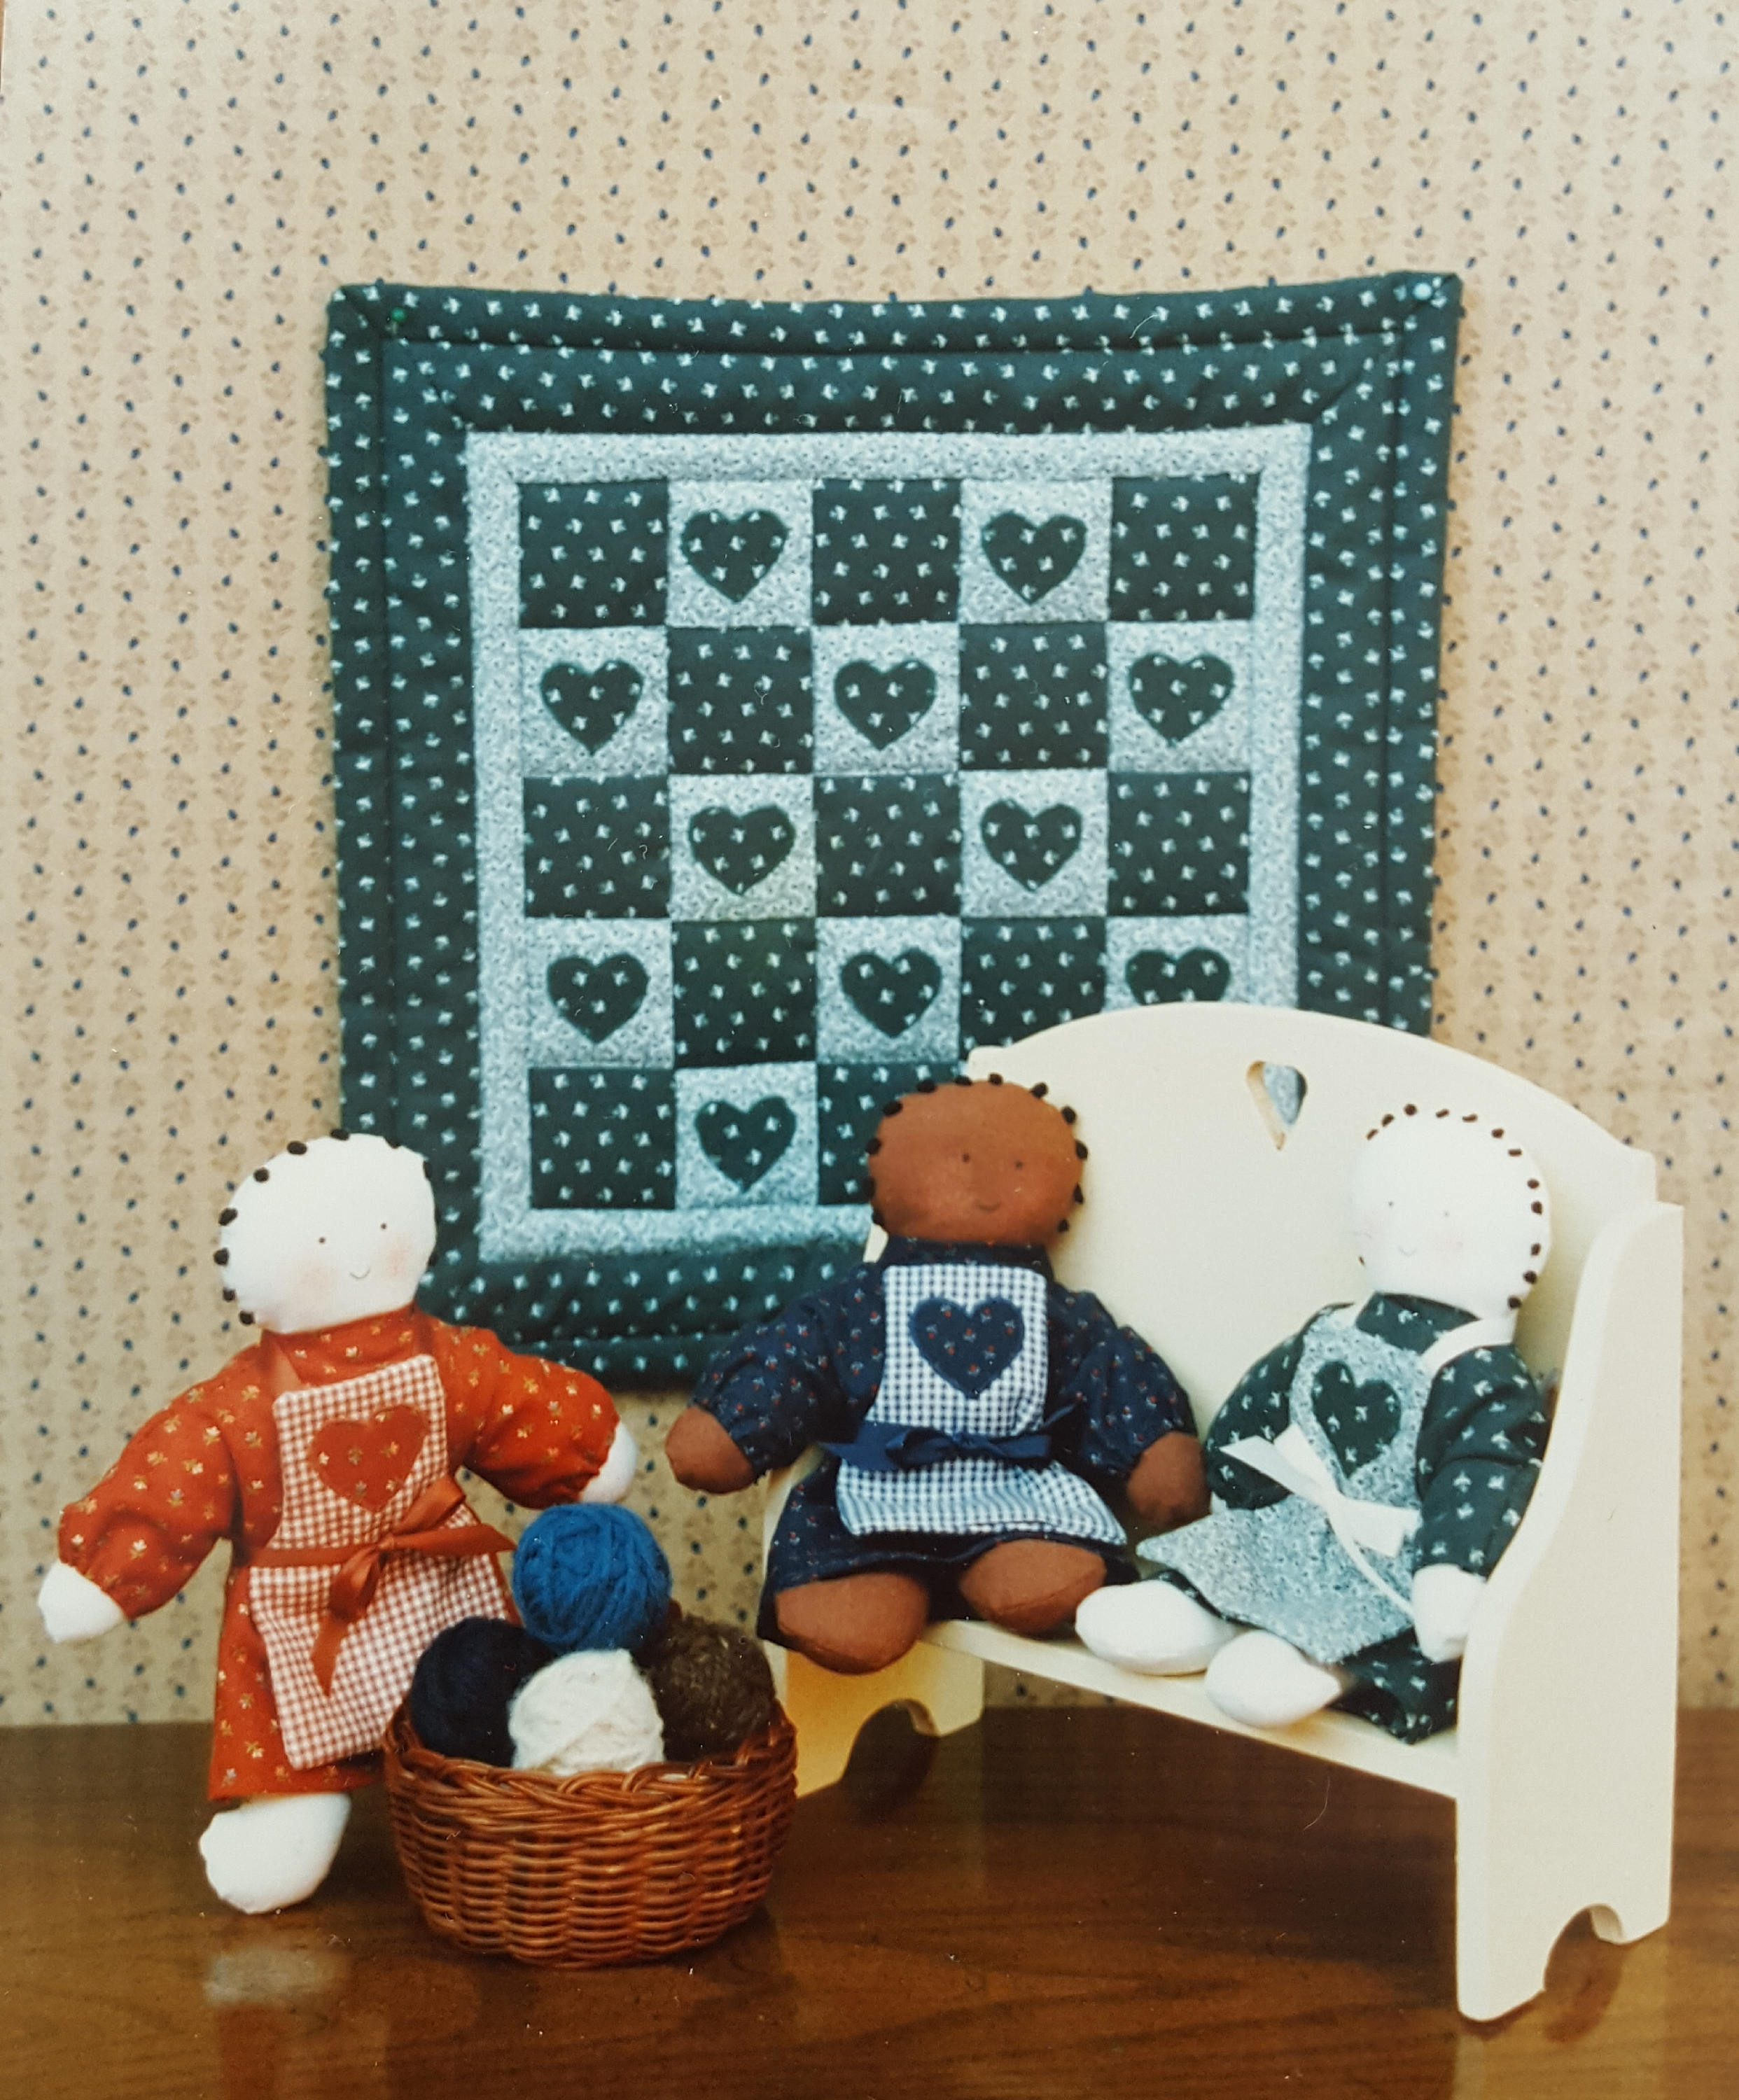 NEW Primitive Country Farmhouse Sitting Rag Doll W/Embroidered Apron &Teddy Bear 